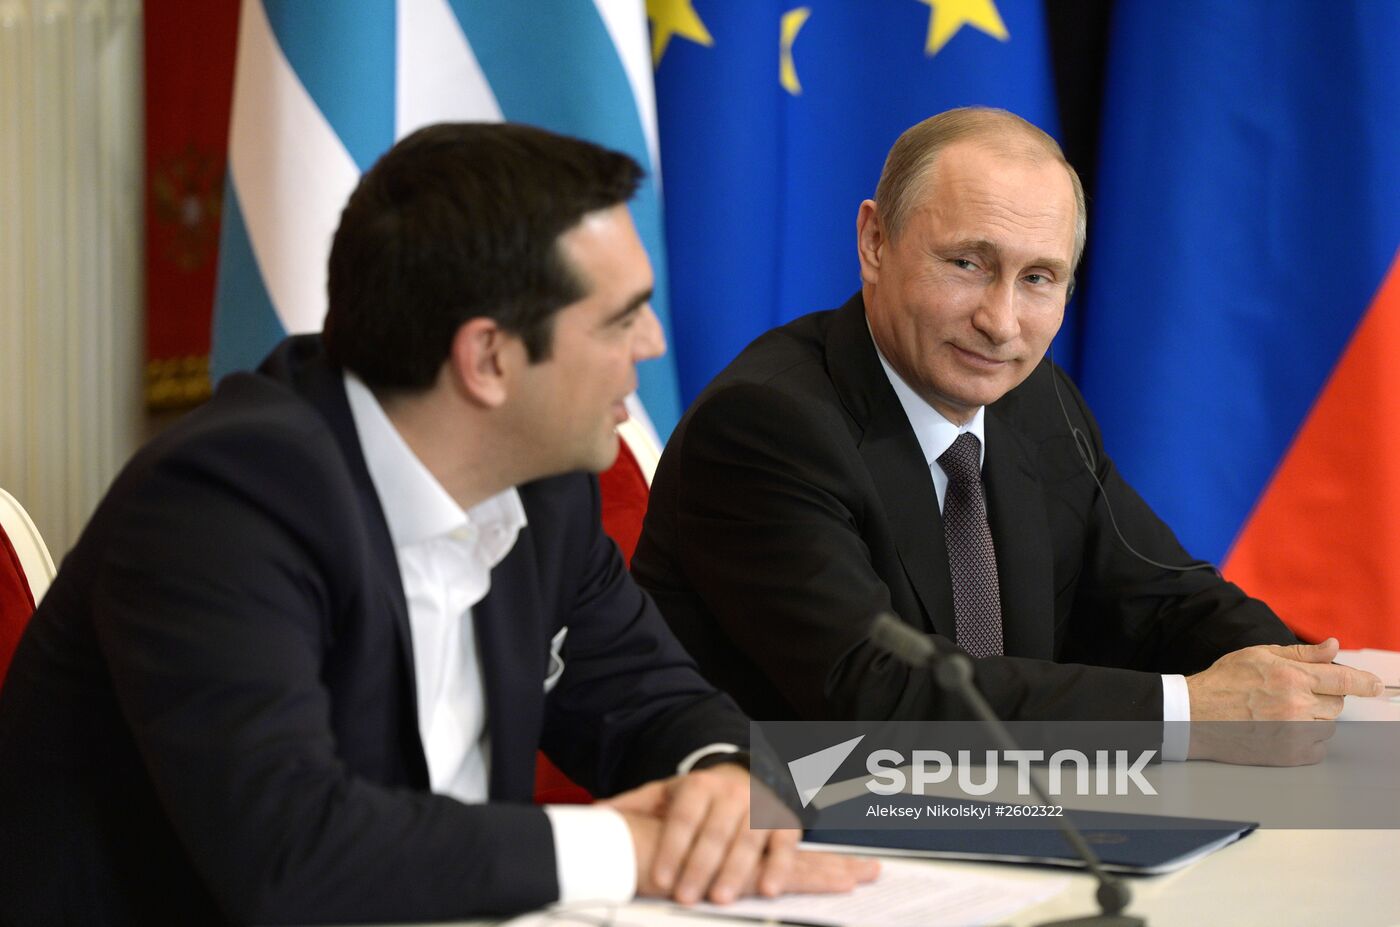 Vladimir Putin meets with Greek Prime Minister Alexis Tsipras